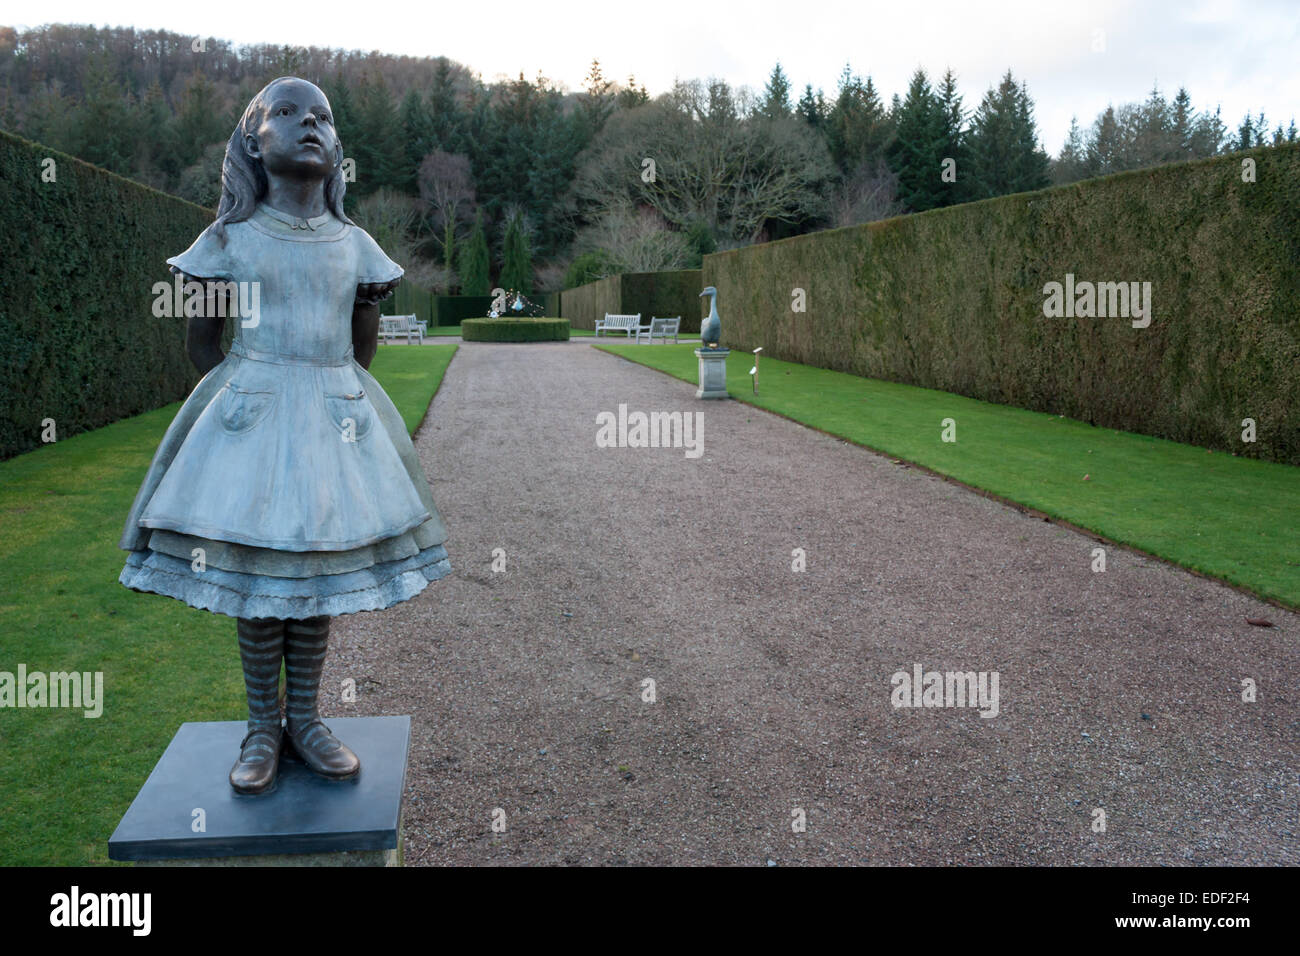 Statue Of Alice In Wonderland In Garden Stock Photo Alamy